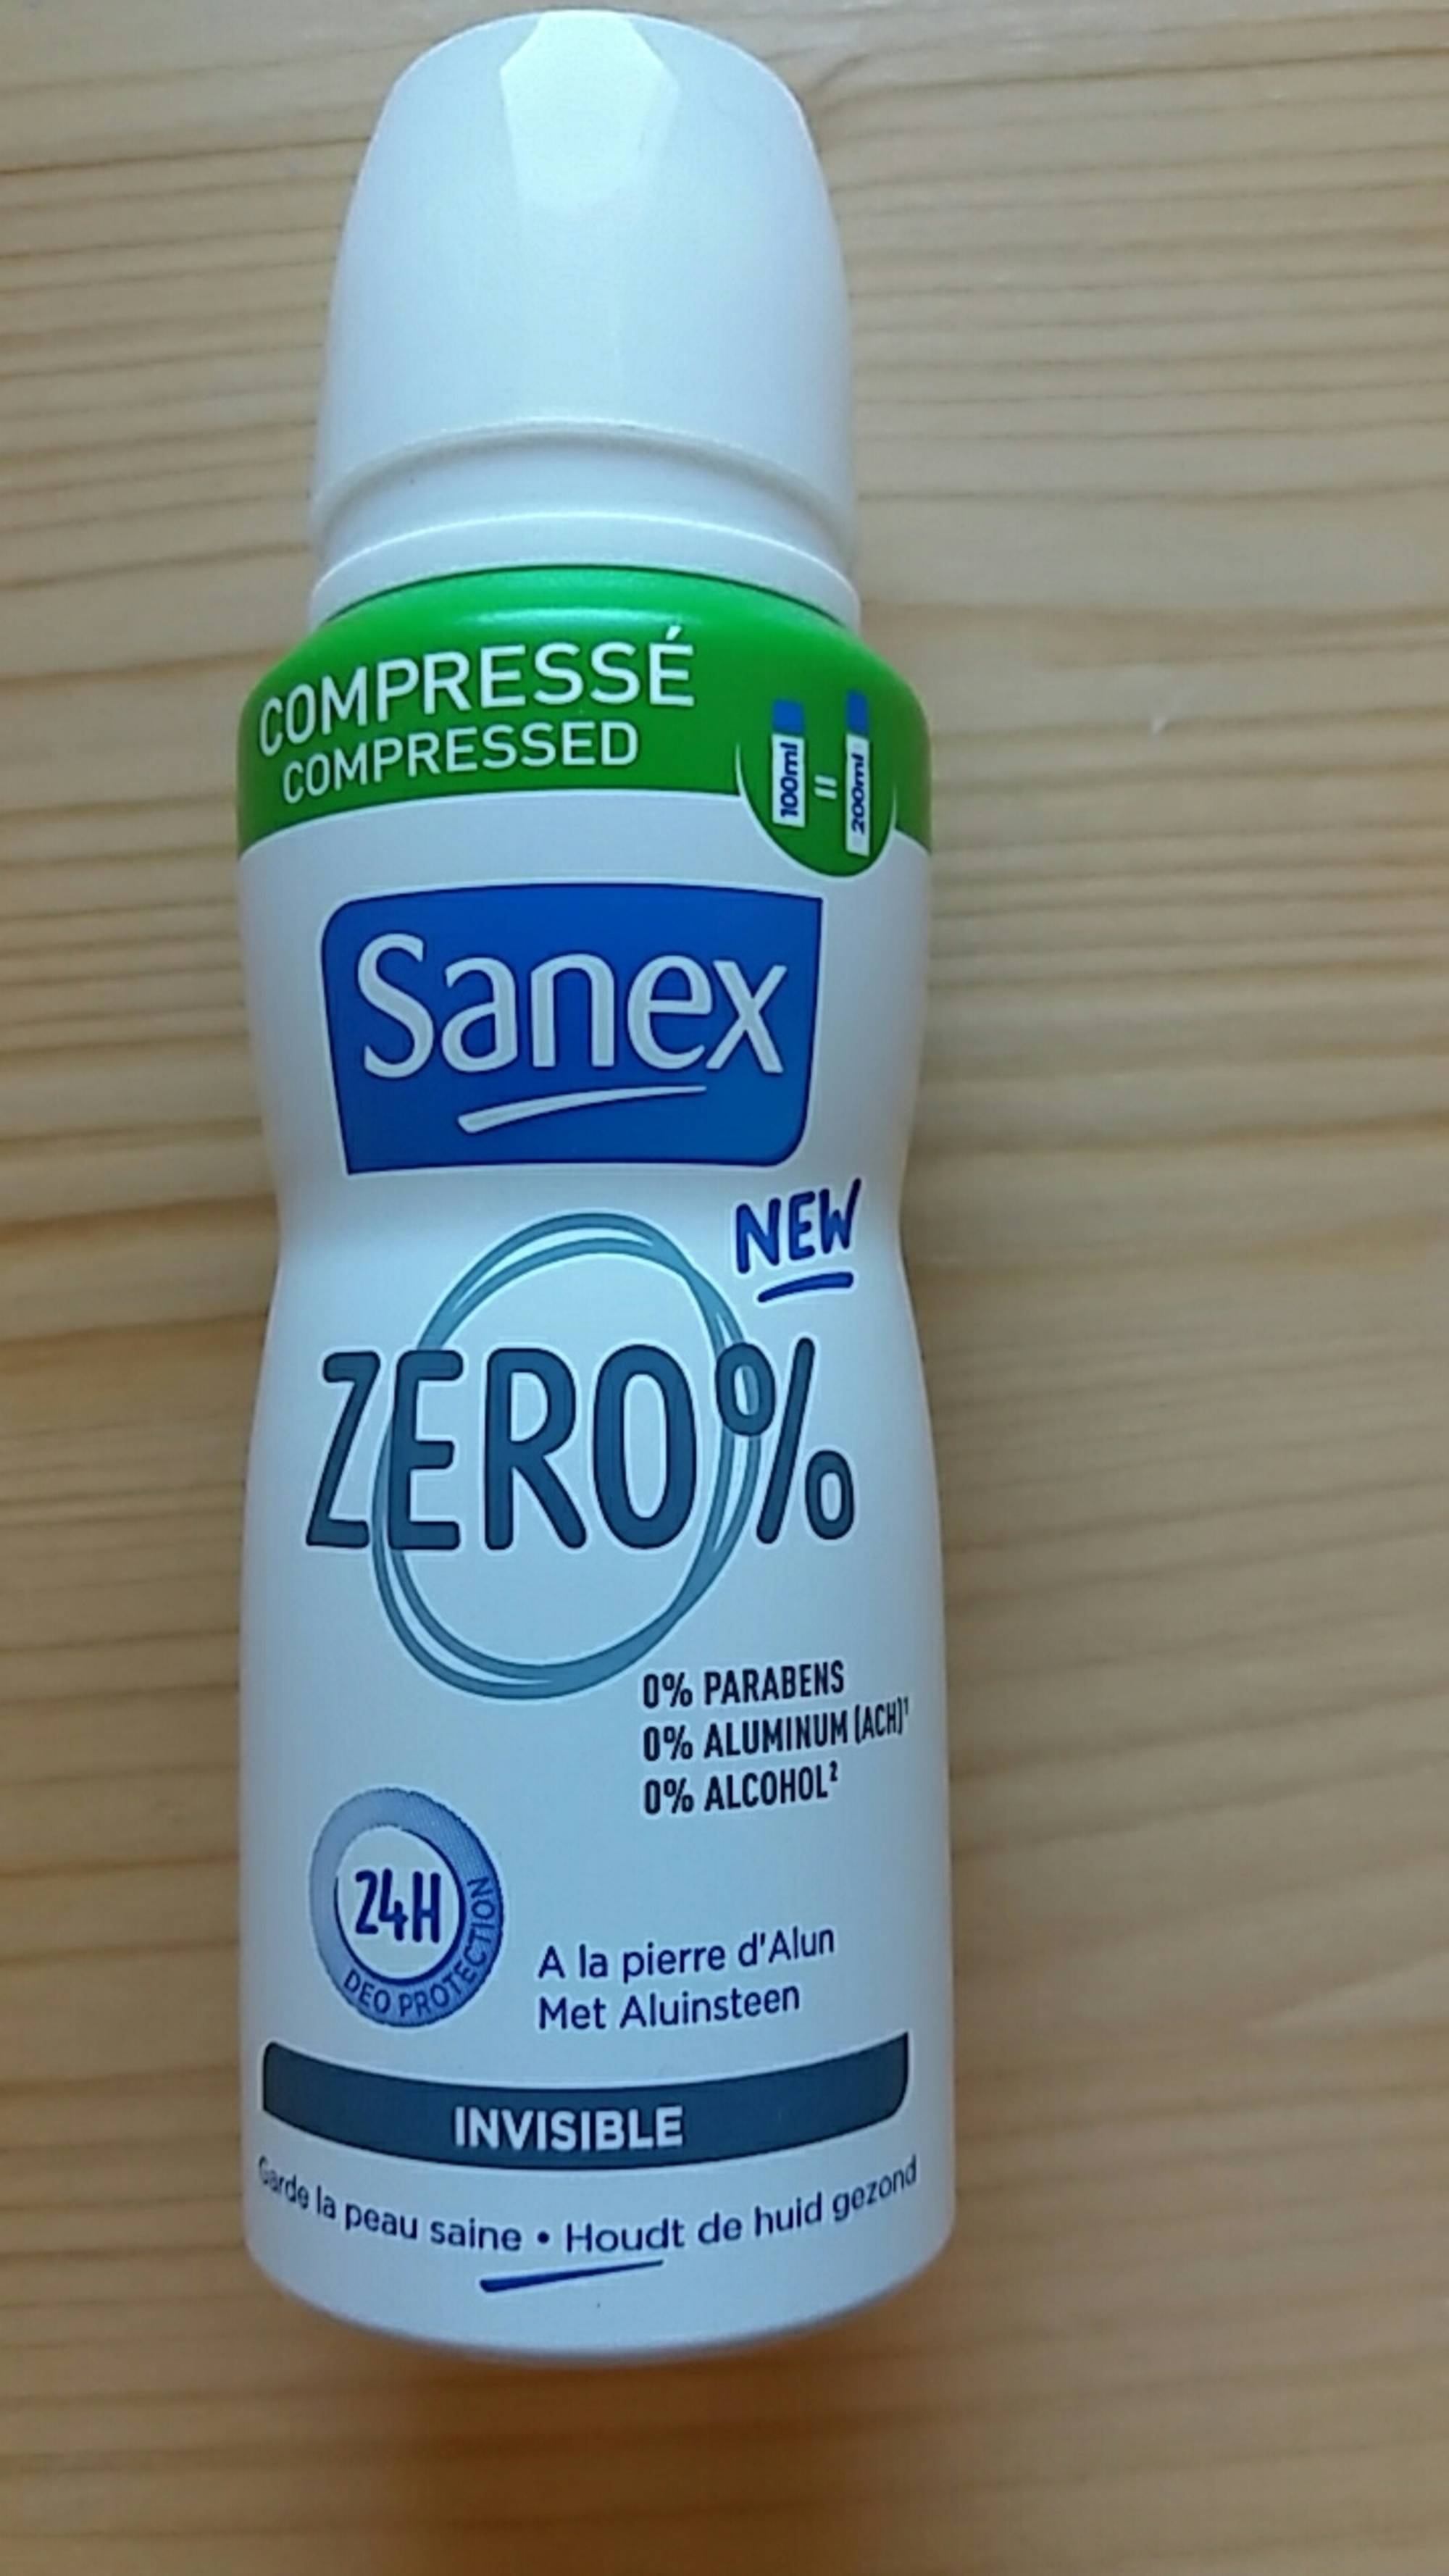 SANEX - Zéro% Invisible - Déo protection 24h